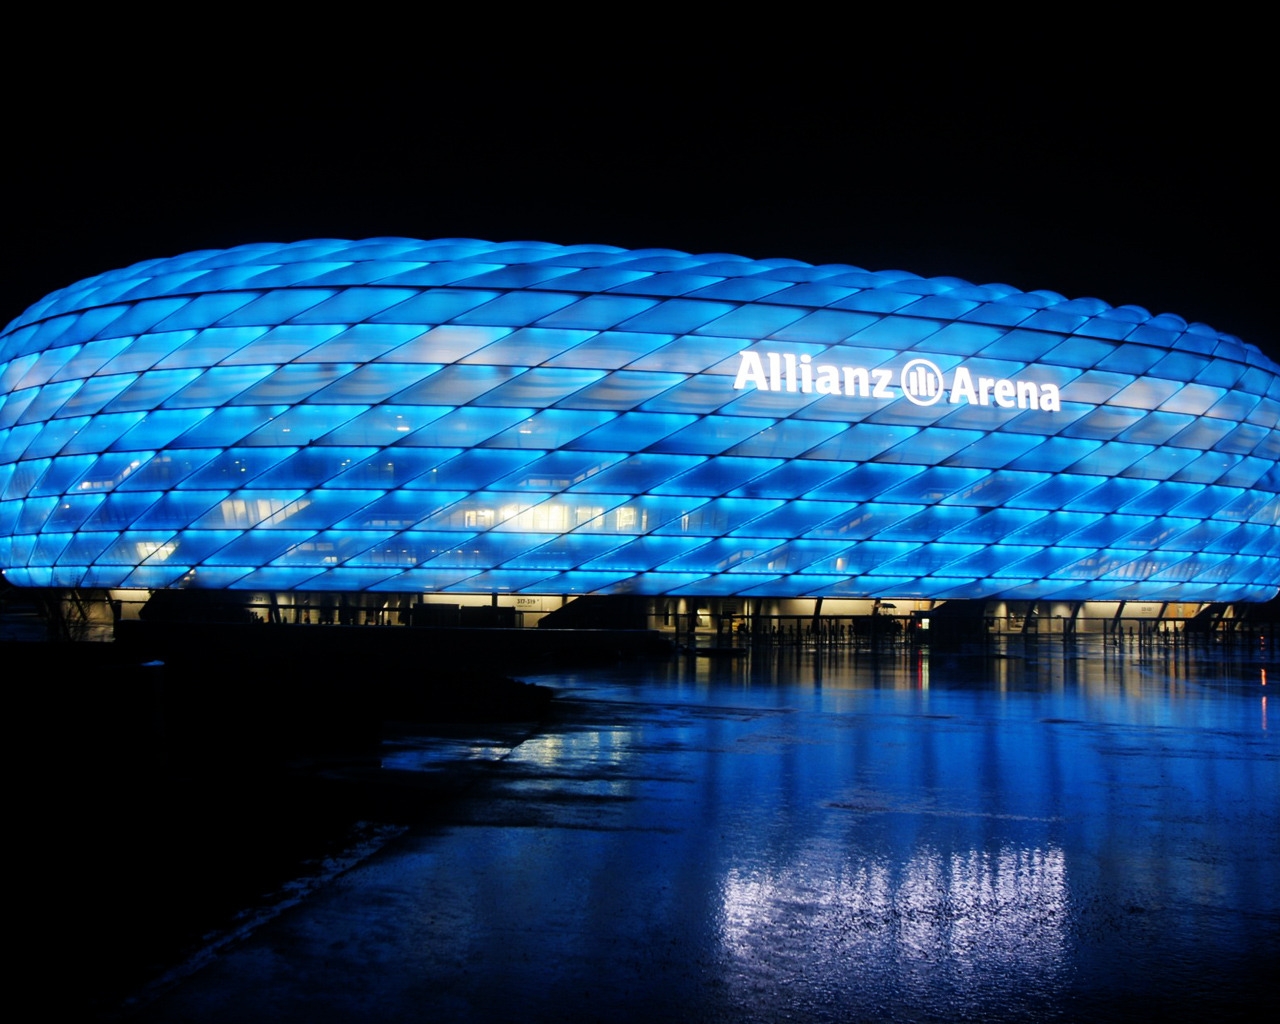 The Allianz Arena Munich for 1280 x 1024 resolution